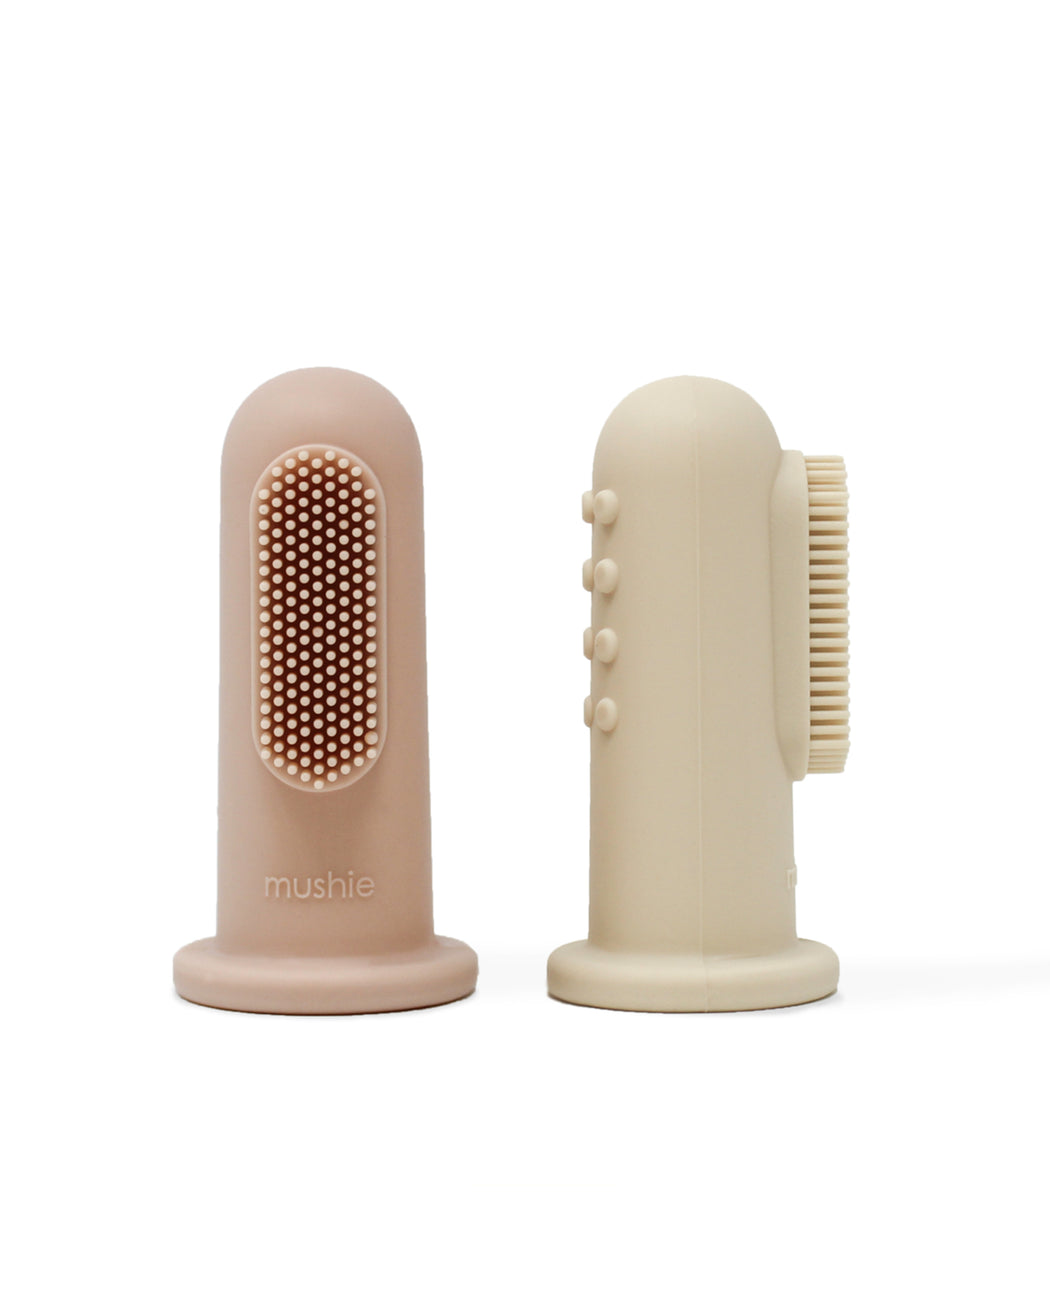 Finger Toothbrush – Blush + Shifting Sand